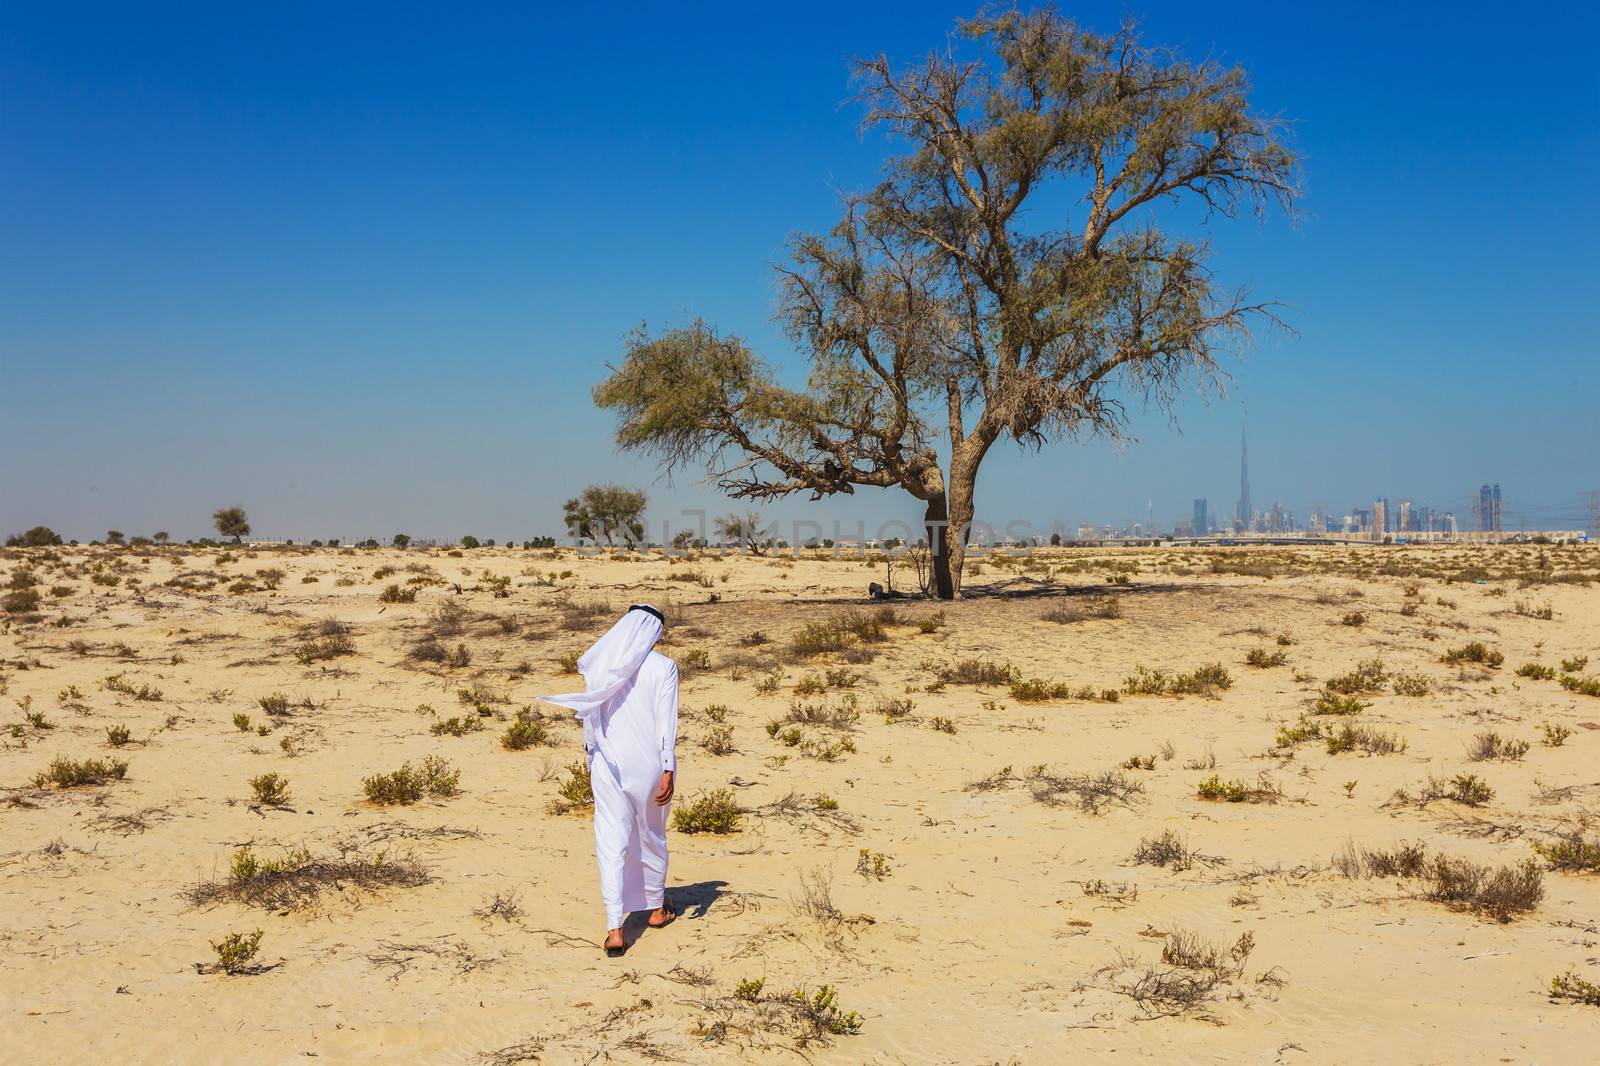 Arab in the Arabian desert on a hot sunny day